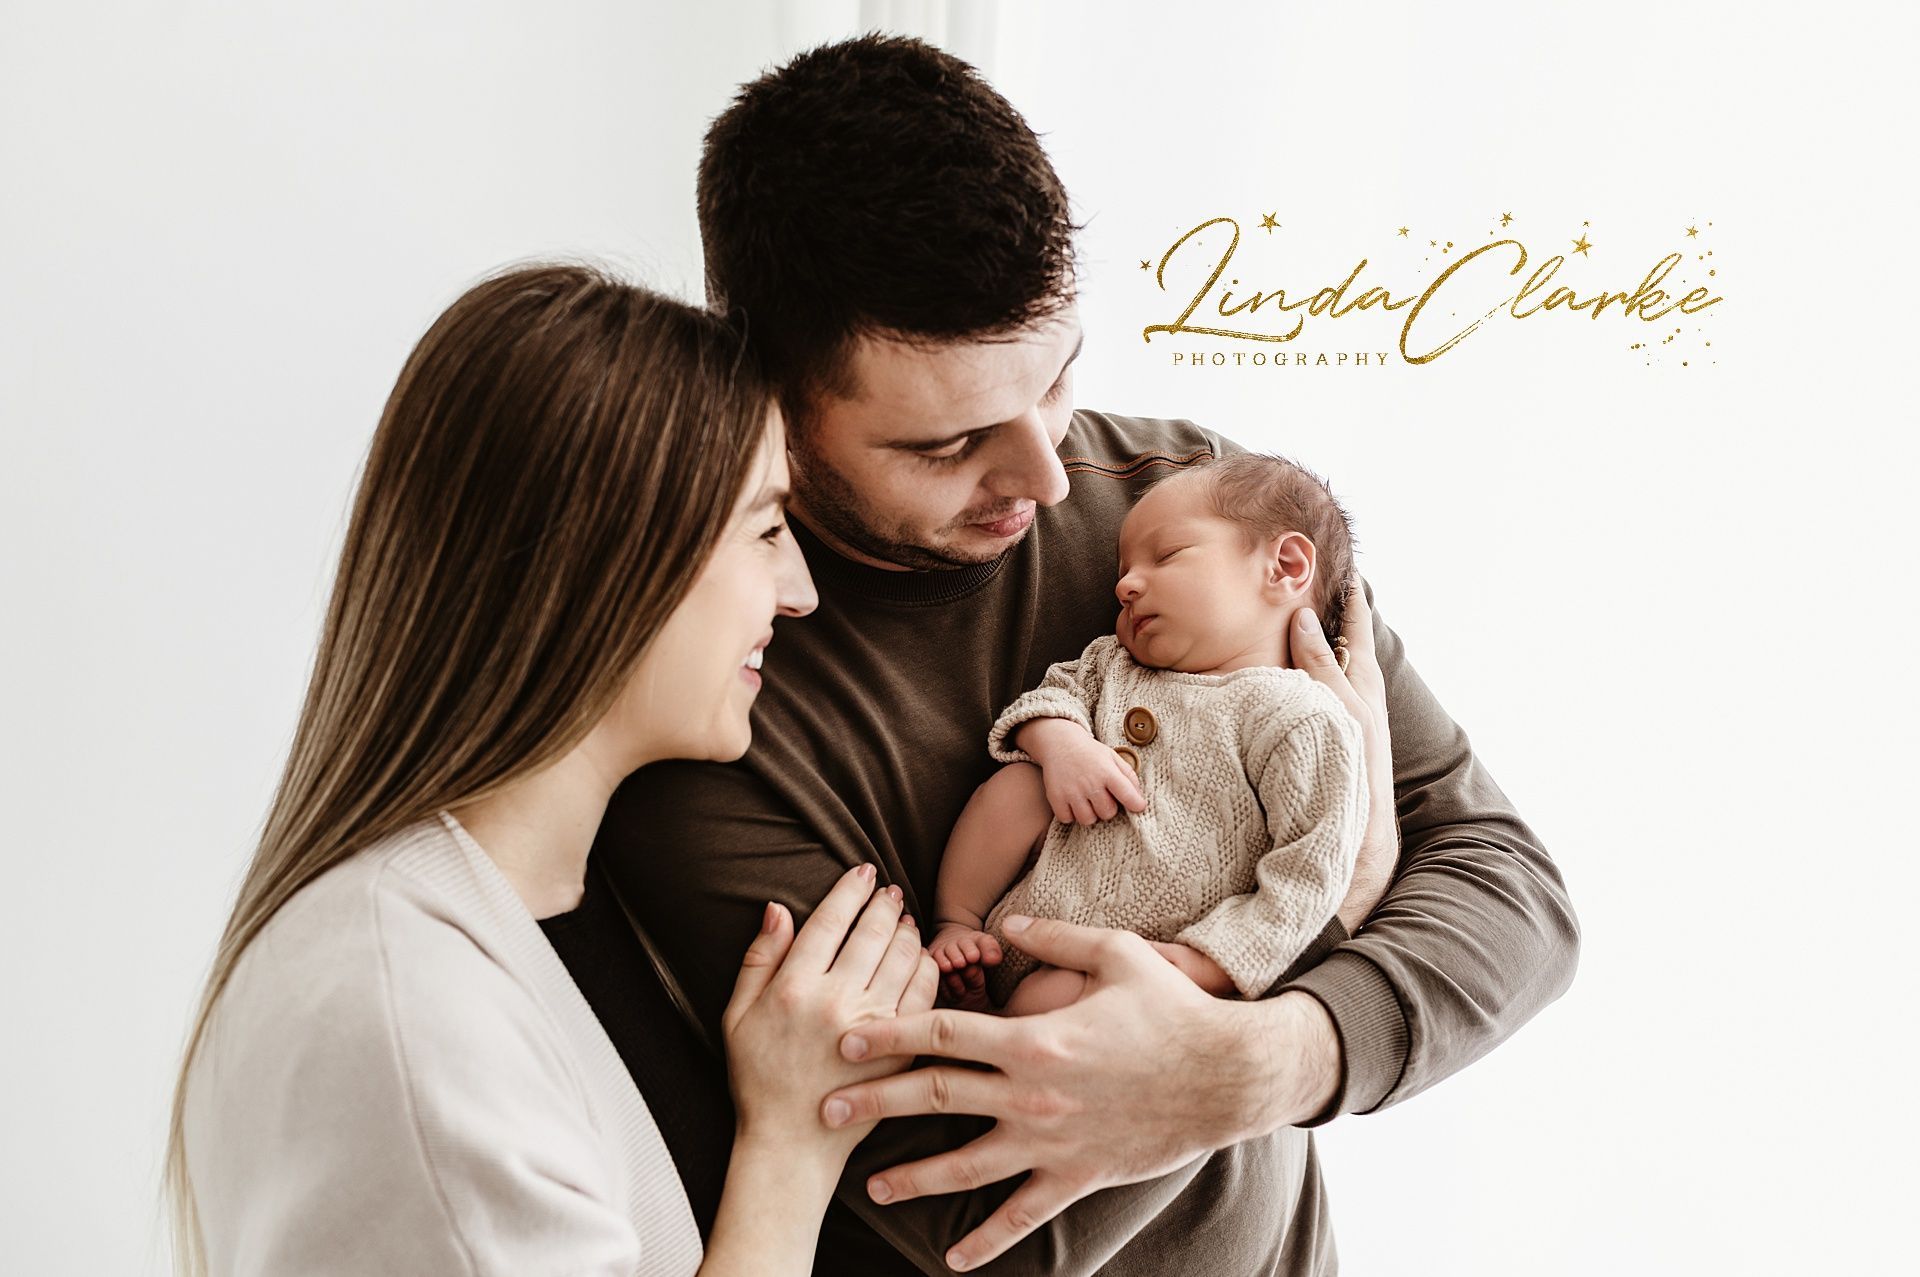 Newborn baby with parents during a newborn photoshoot in dublin Ireland